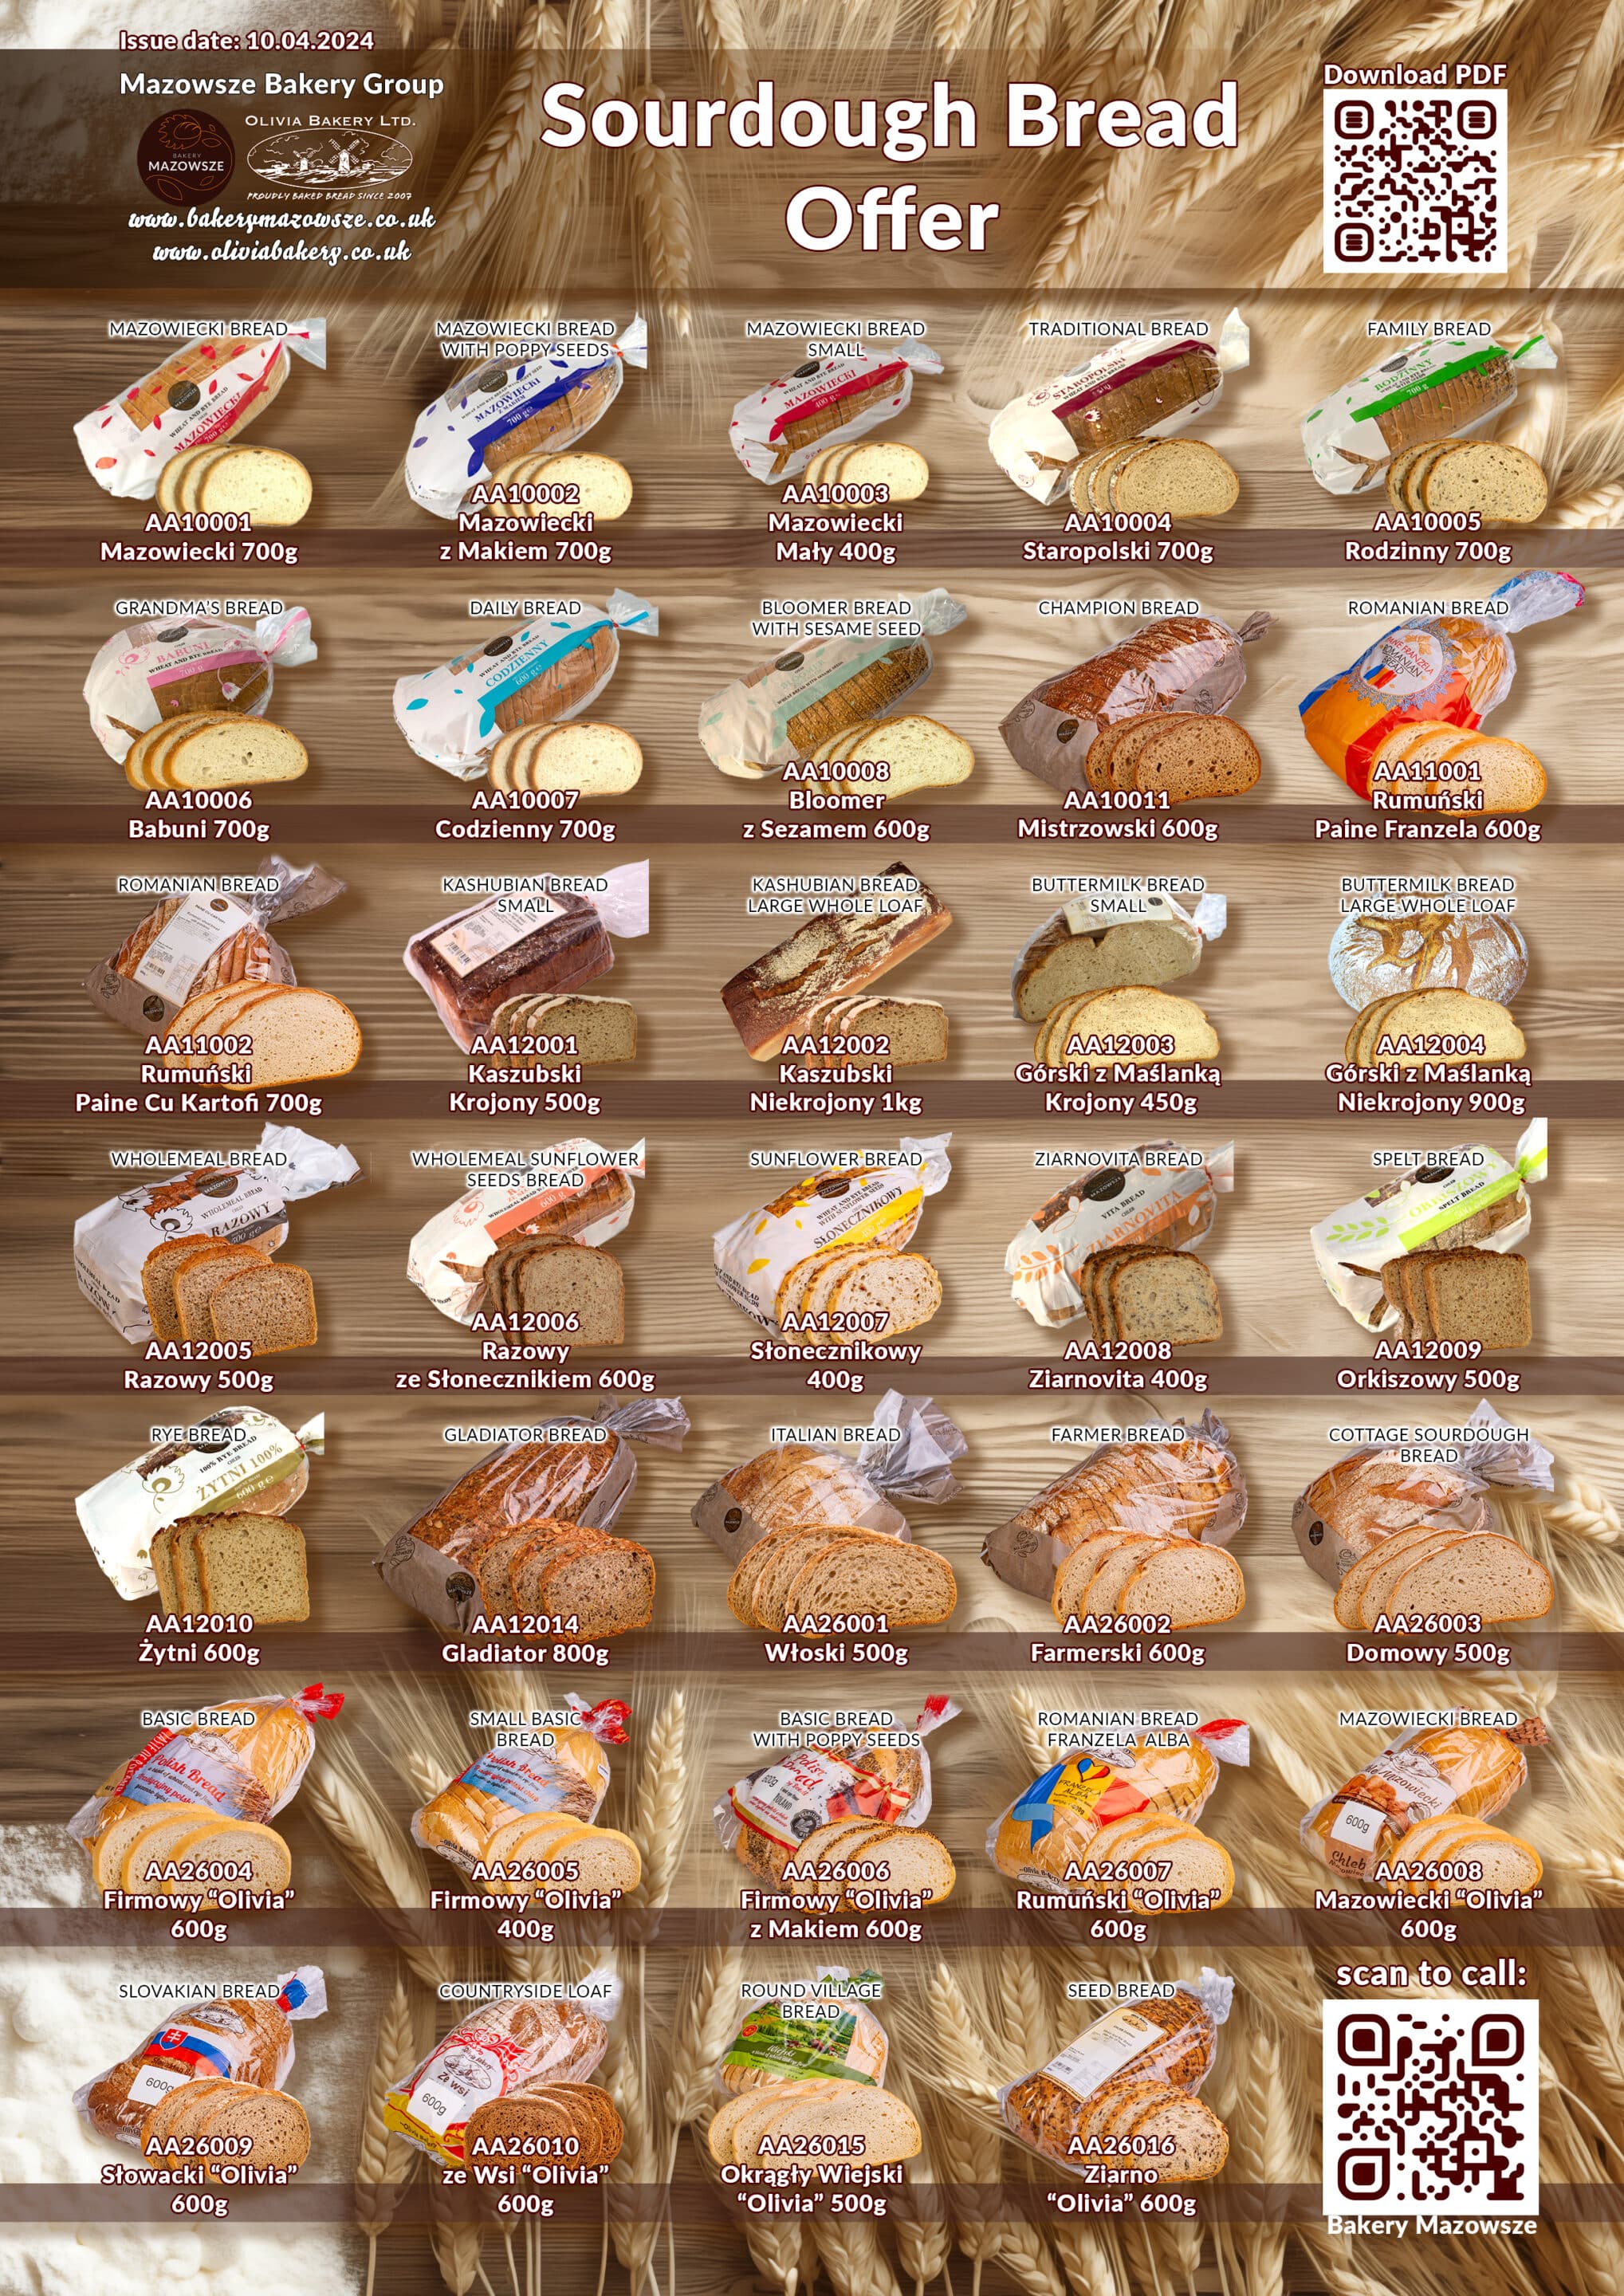 Sourdough bread offer from Mazowsze Bakery Group, showcasing various sourdough bread loaves